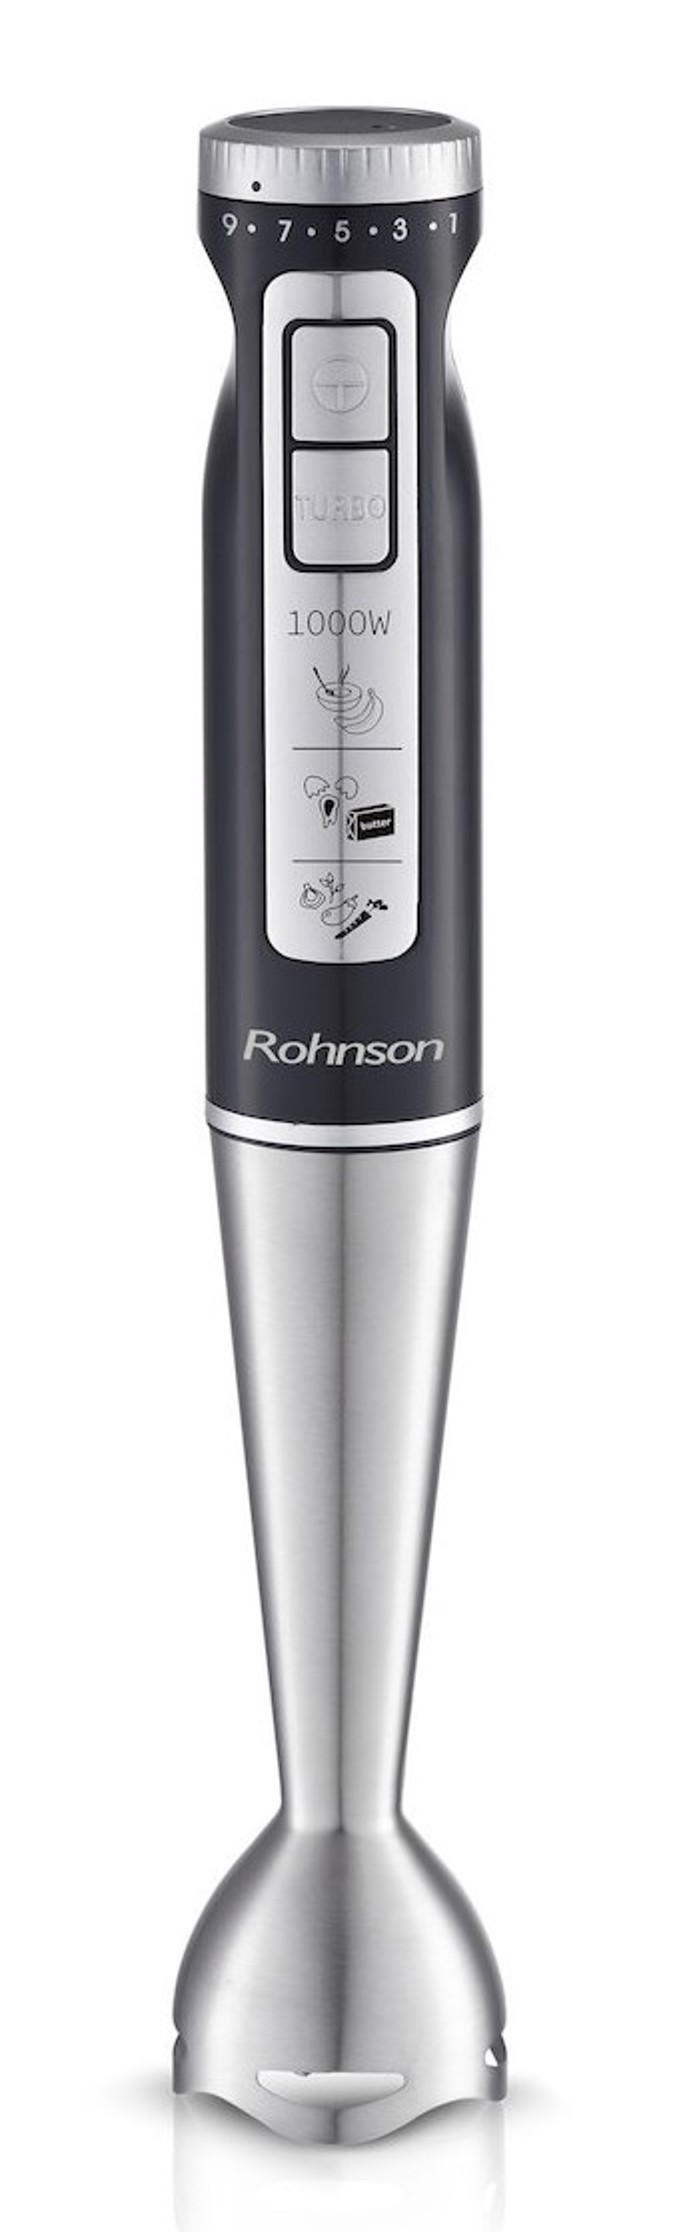 Rohnson R-5791 (Rabdomplenter 1000W)